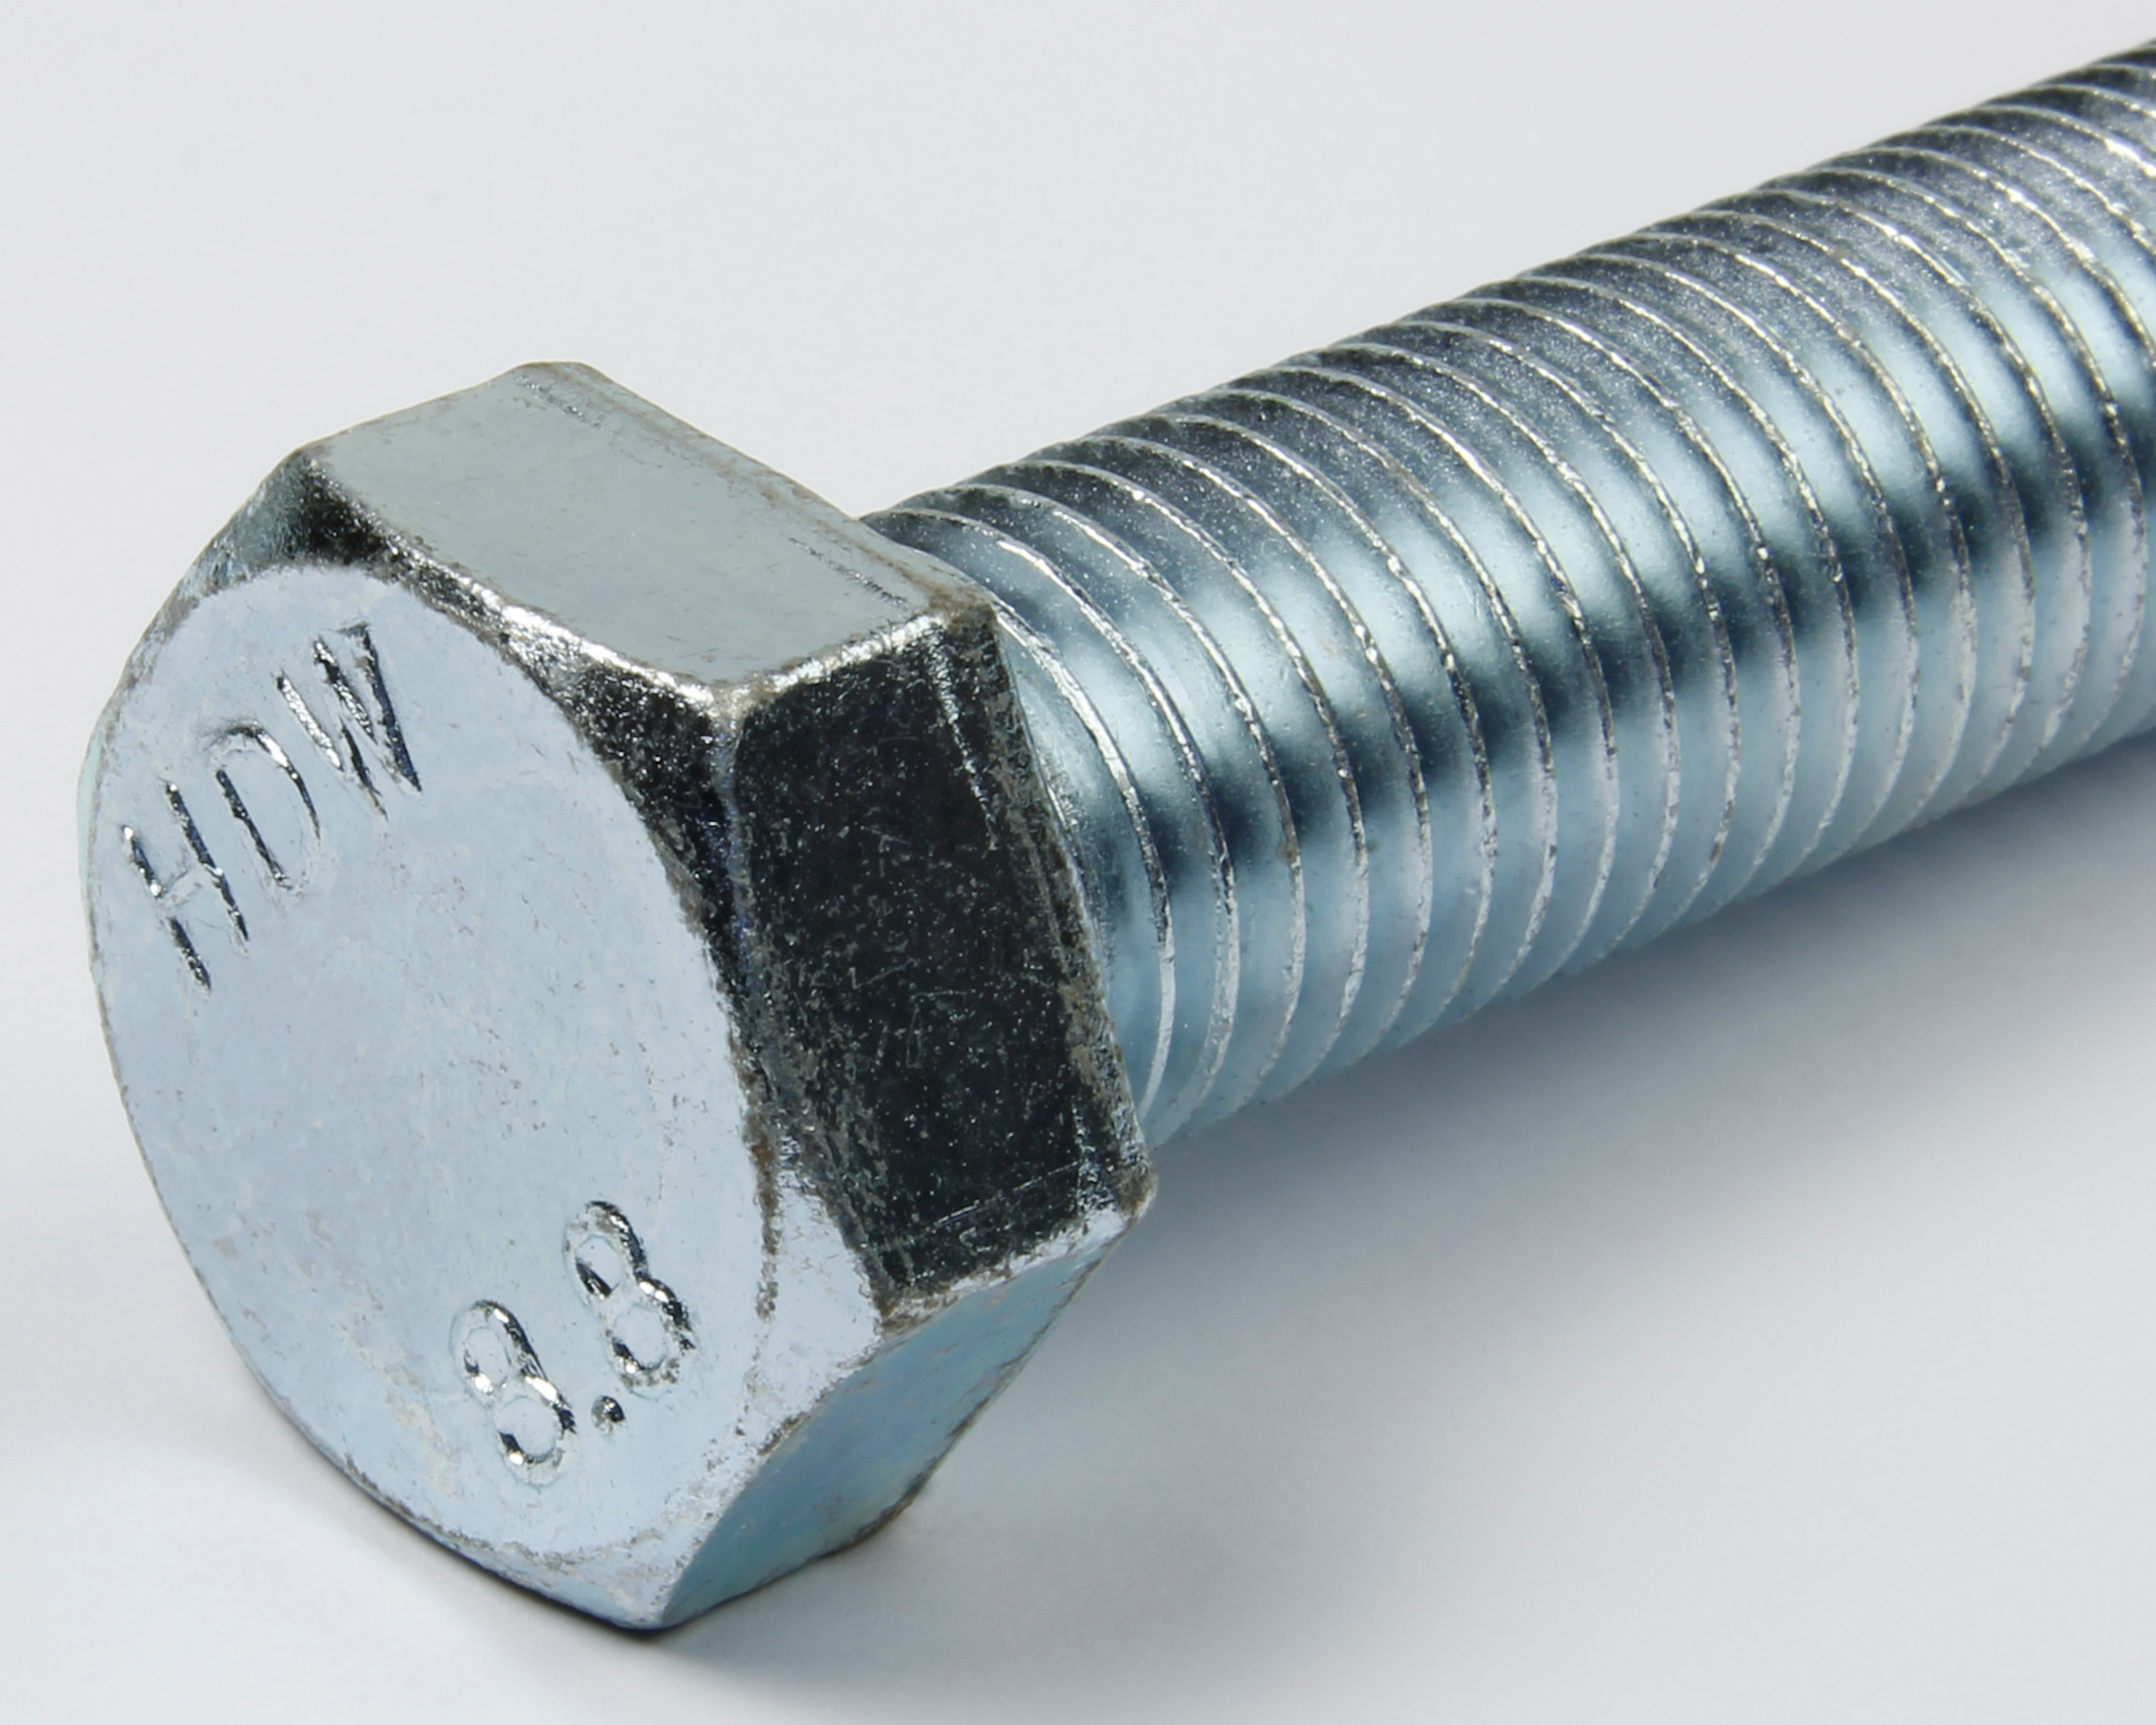 8.8 bright zinc plated high tensile steel bolt